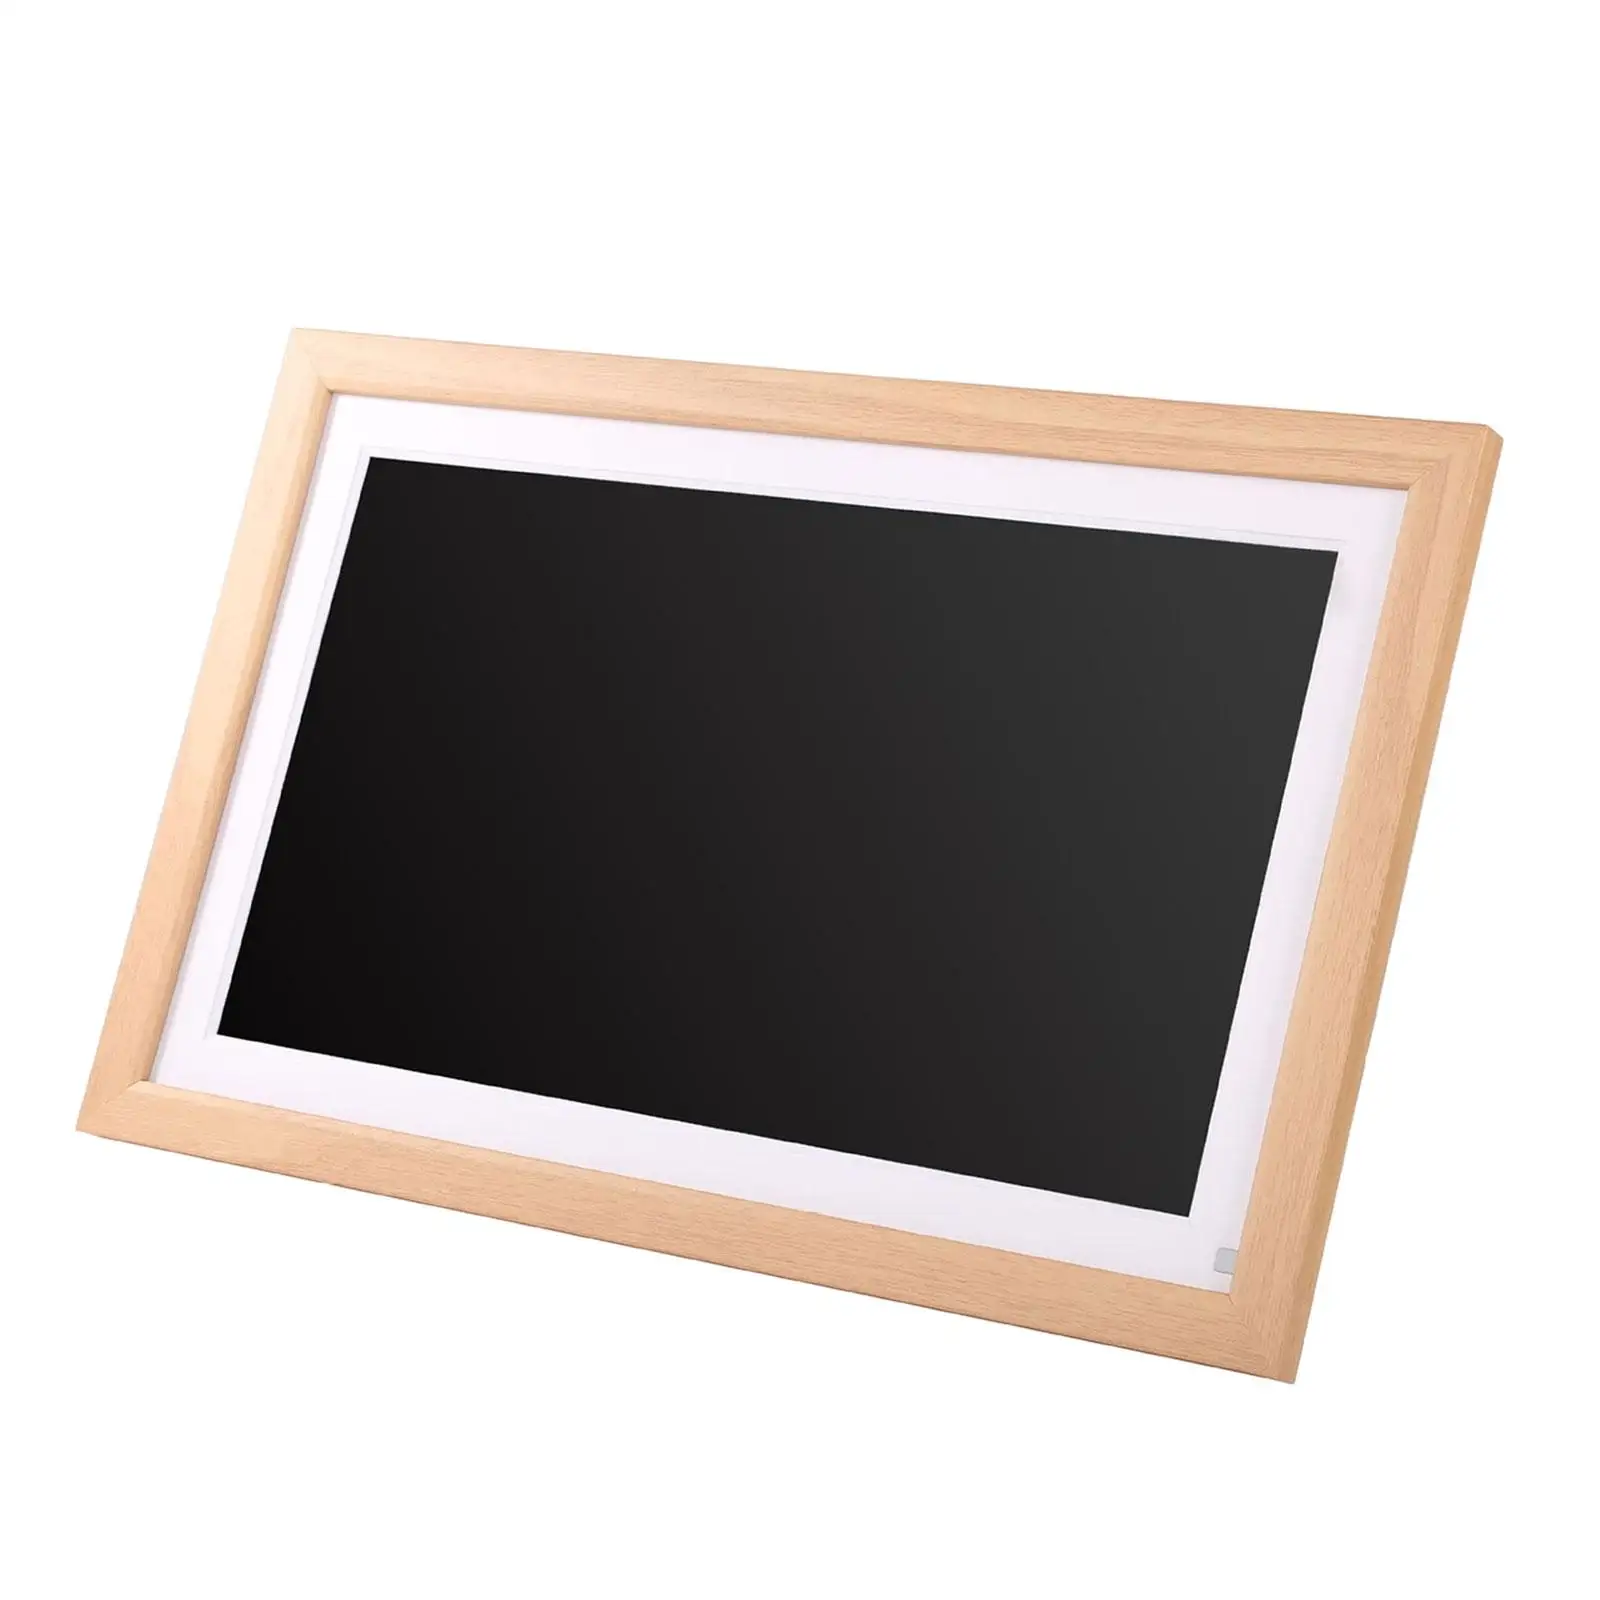 Digital Picture frame Mountable or Desk Mount 1080P Smart Clouds Photo Frame for Home Decor